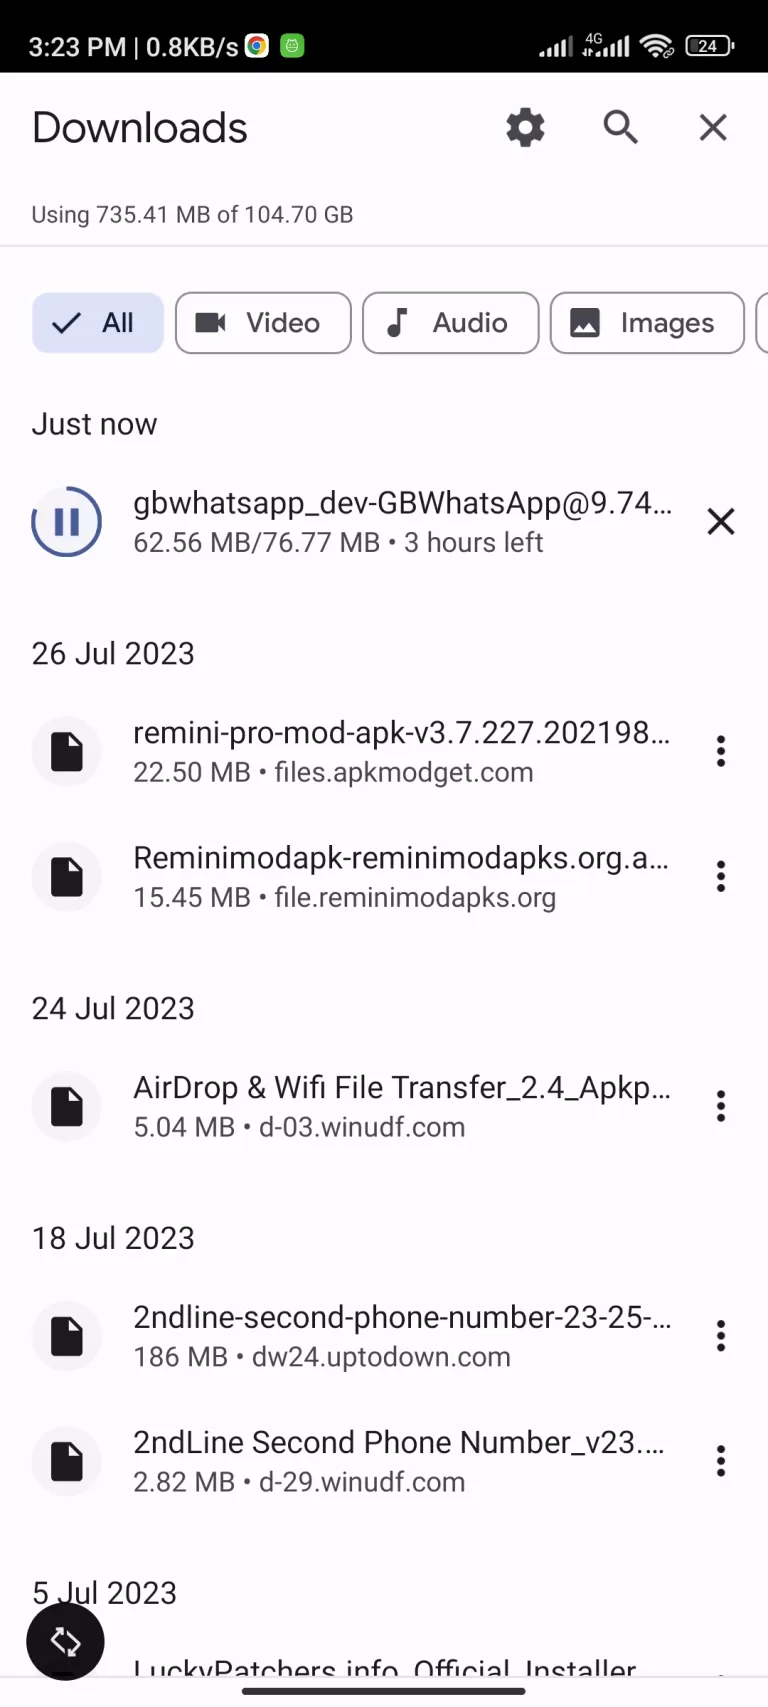 GBWhatsApp Pro APK Download Latest Version Anti Ban 2023 - GBPLUS APK